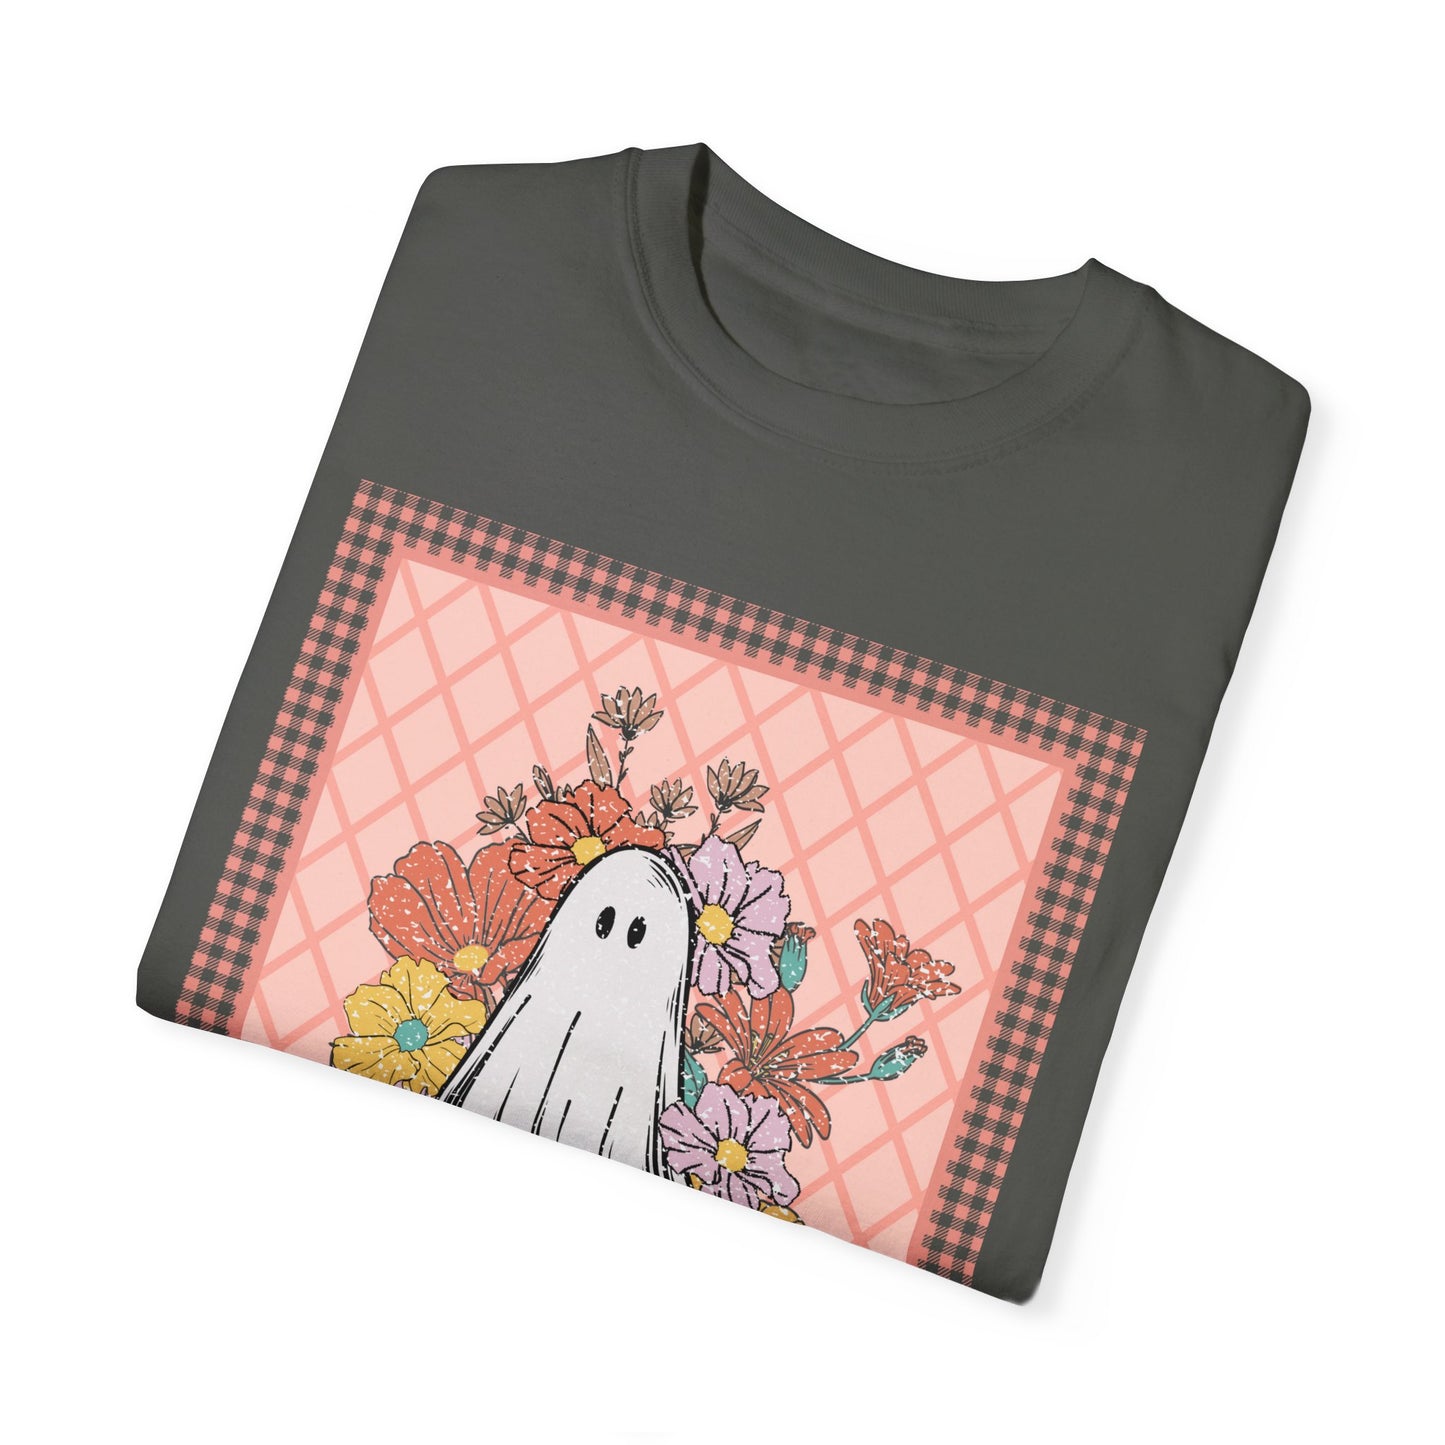 Retro Ghoul Pink Gingham Halloween Woman Tee | Western Halloween T-Shirt Women Funny Ghost Graphic Print Shirt Tee Top